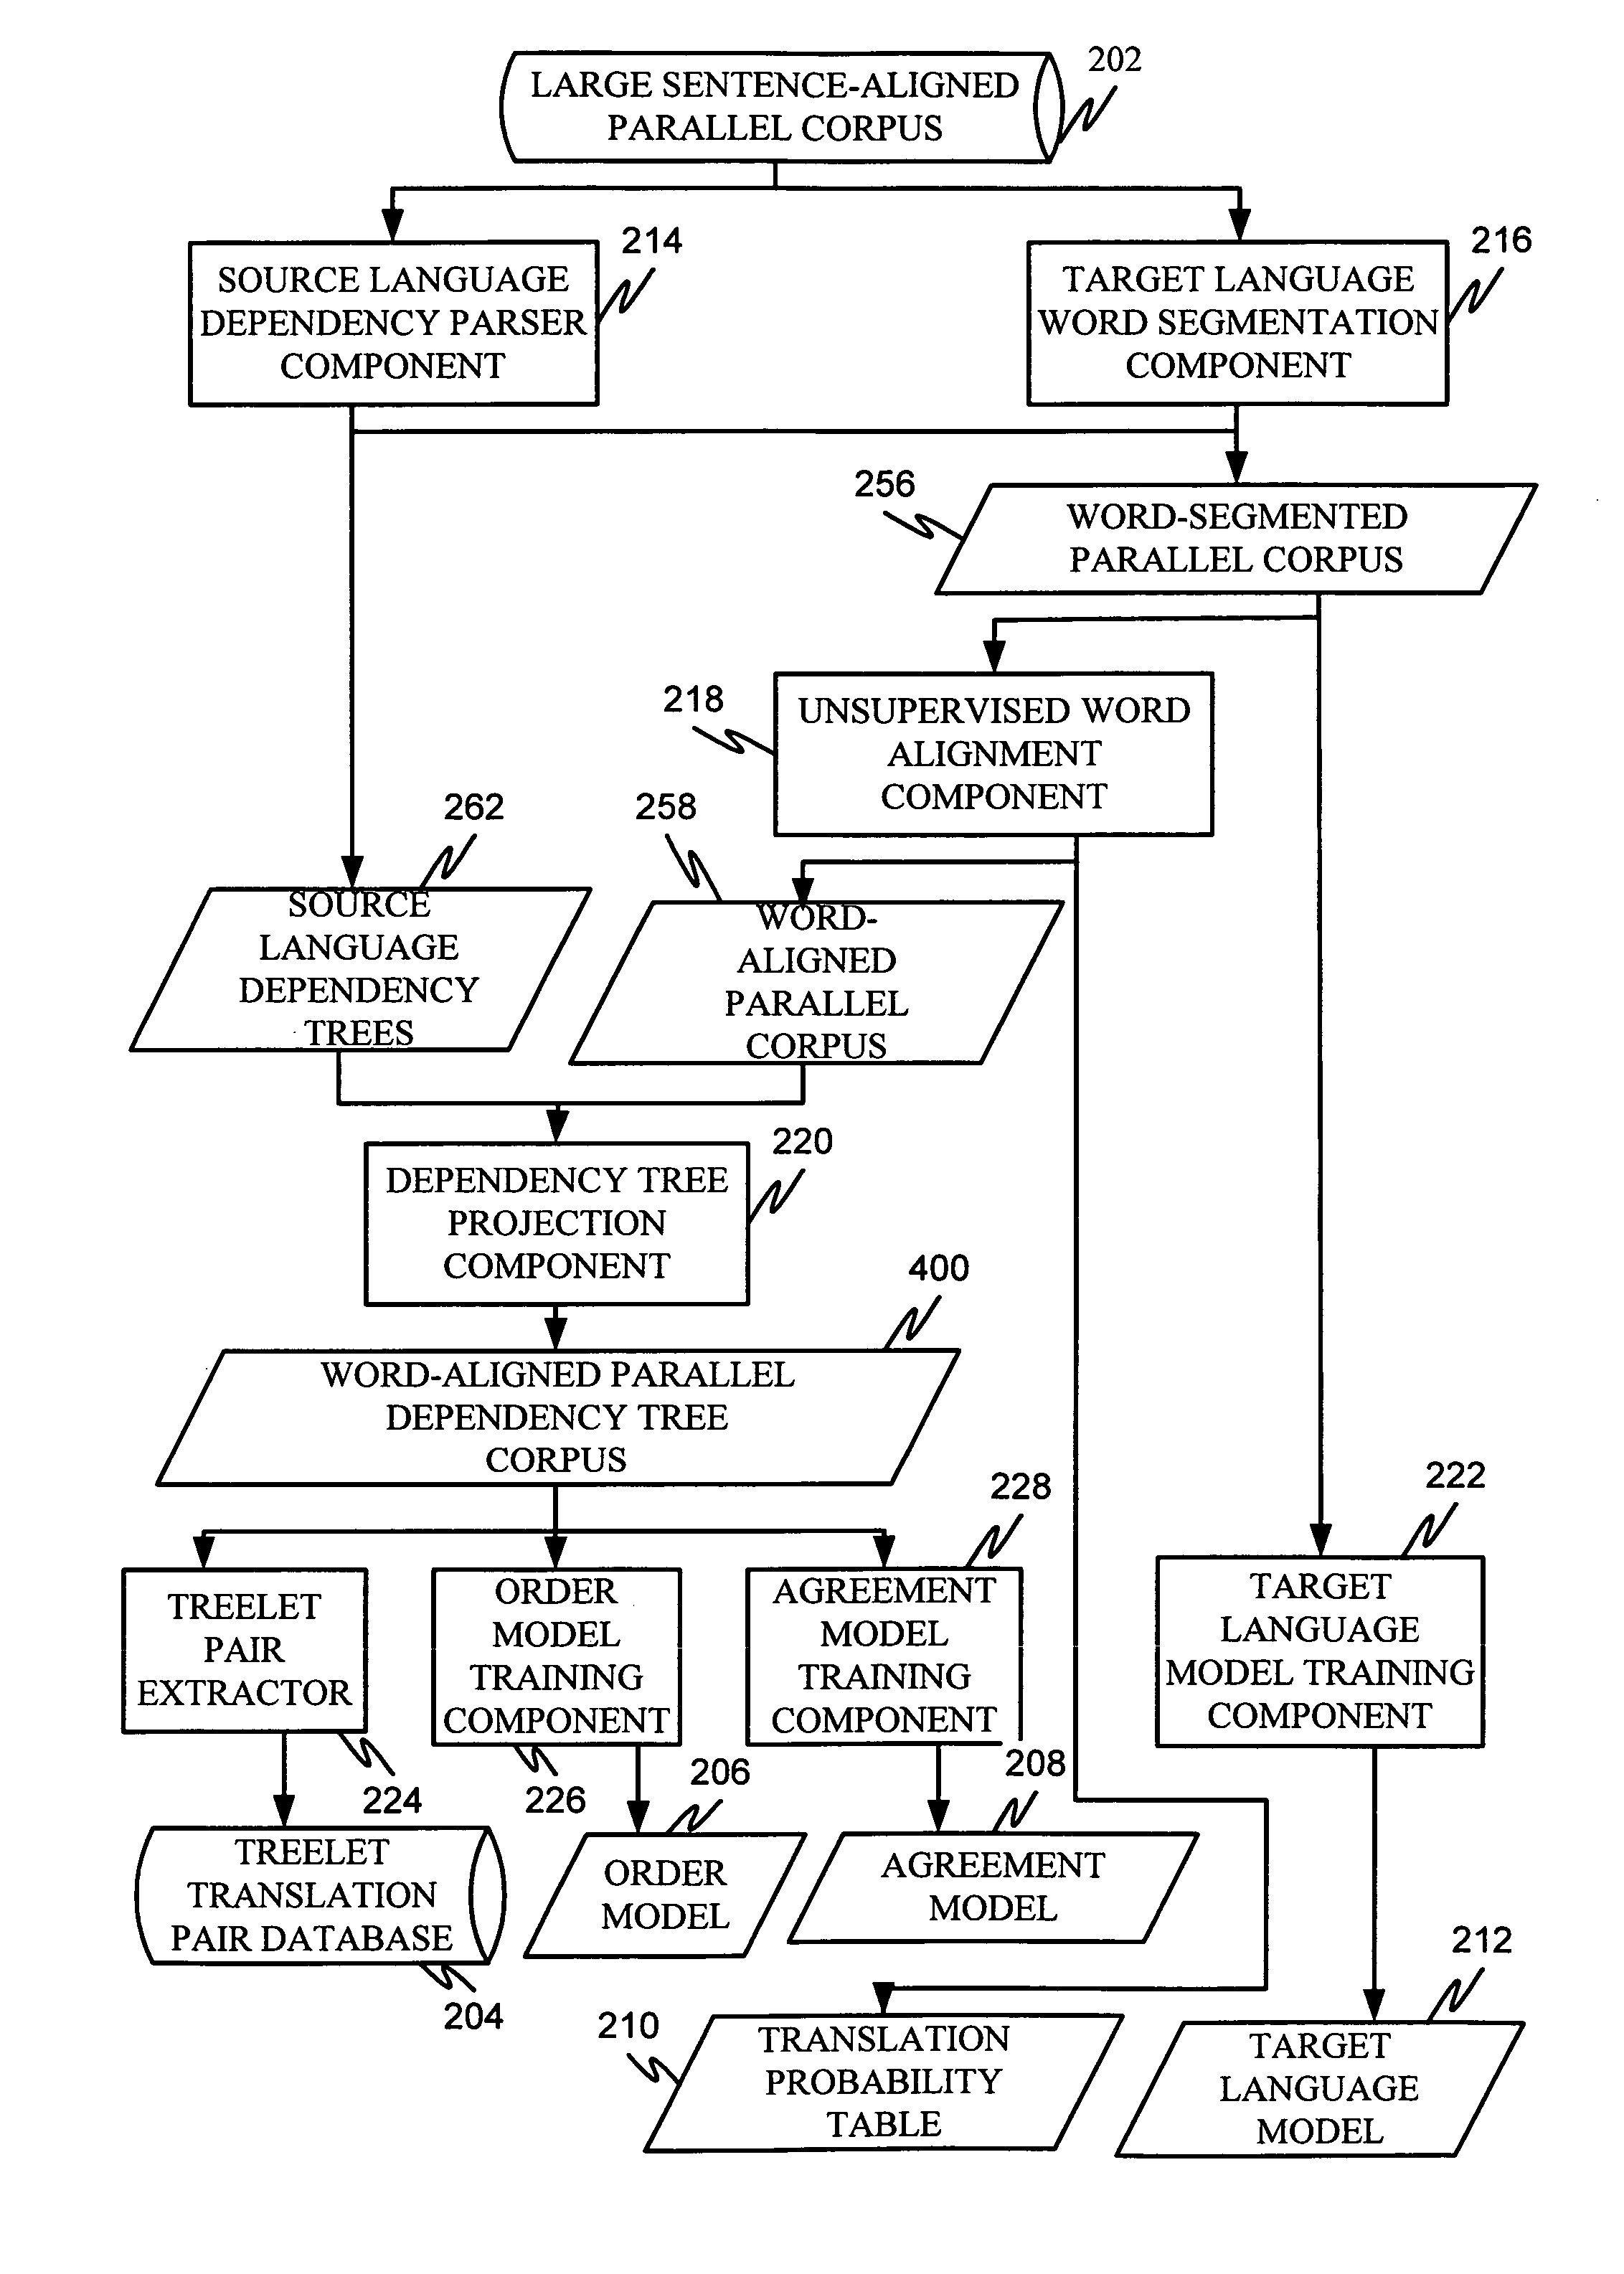 Order model for dependency structure